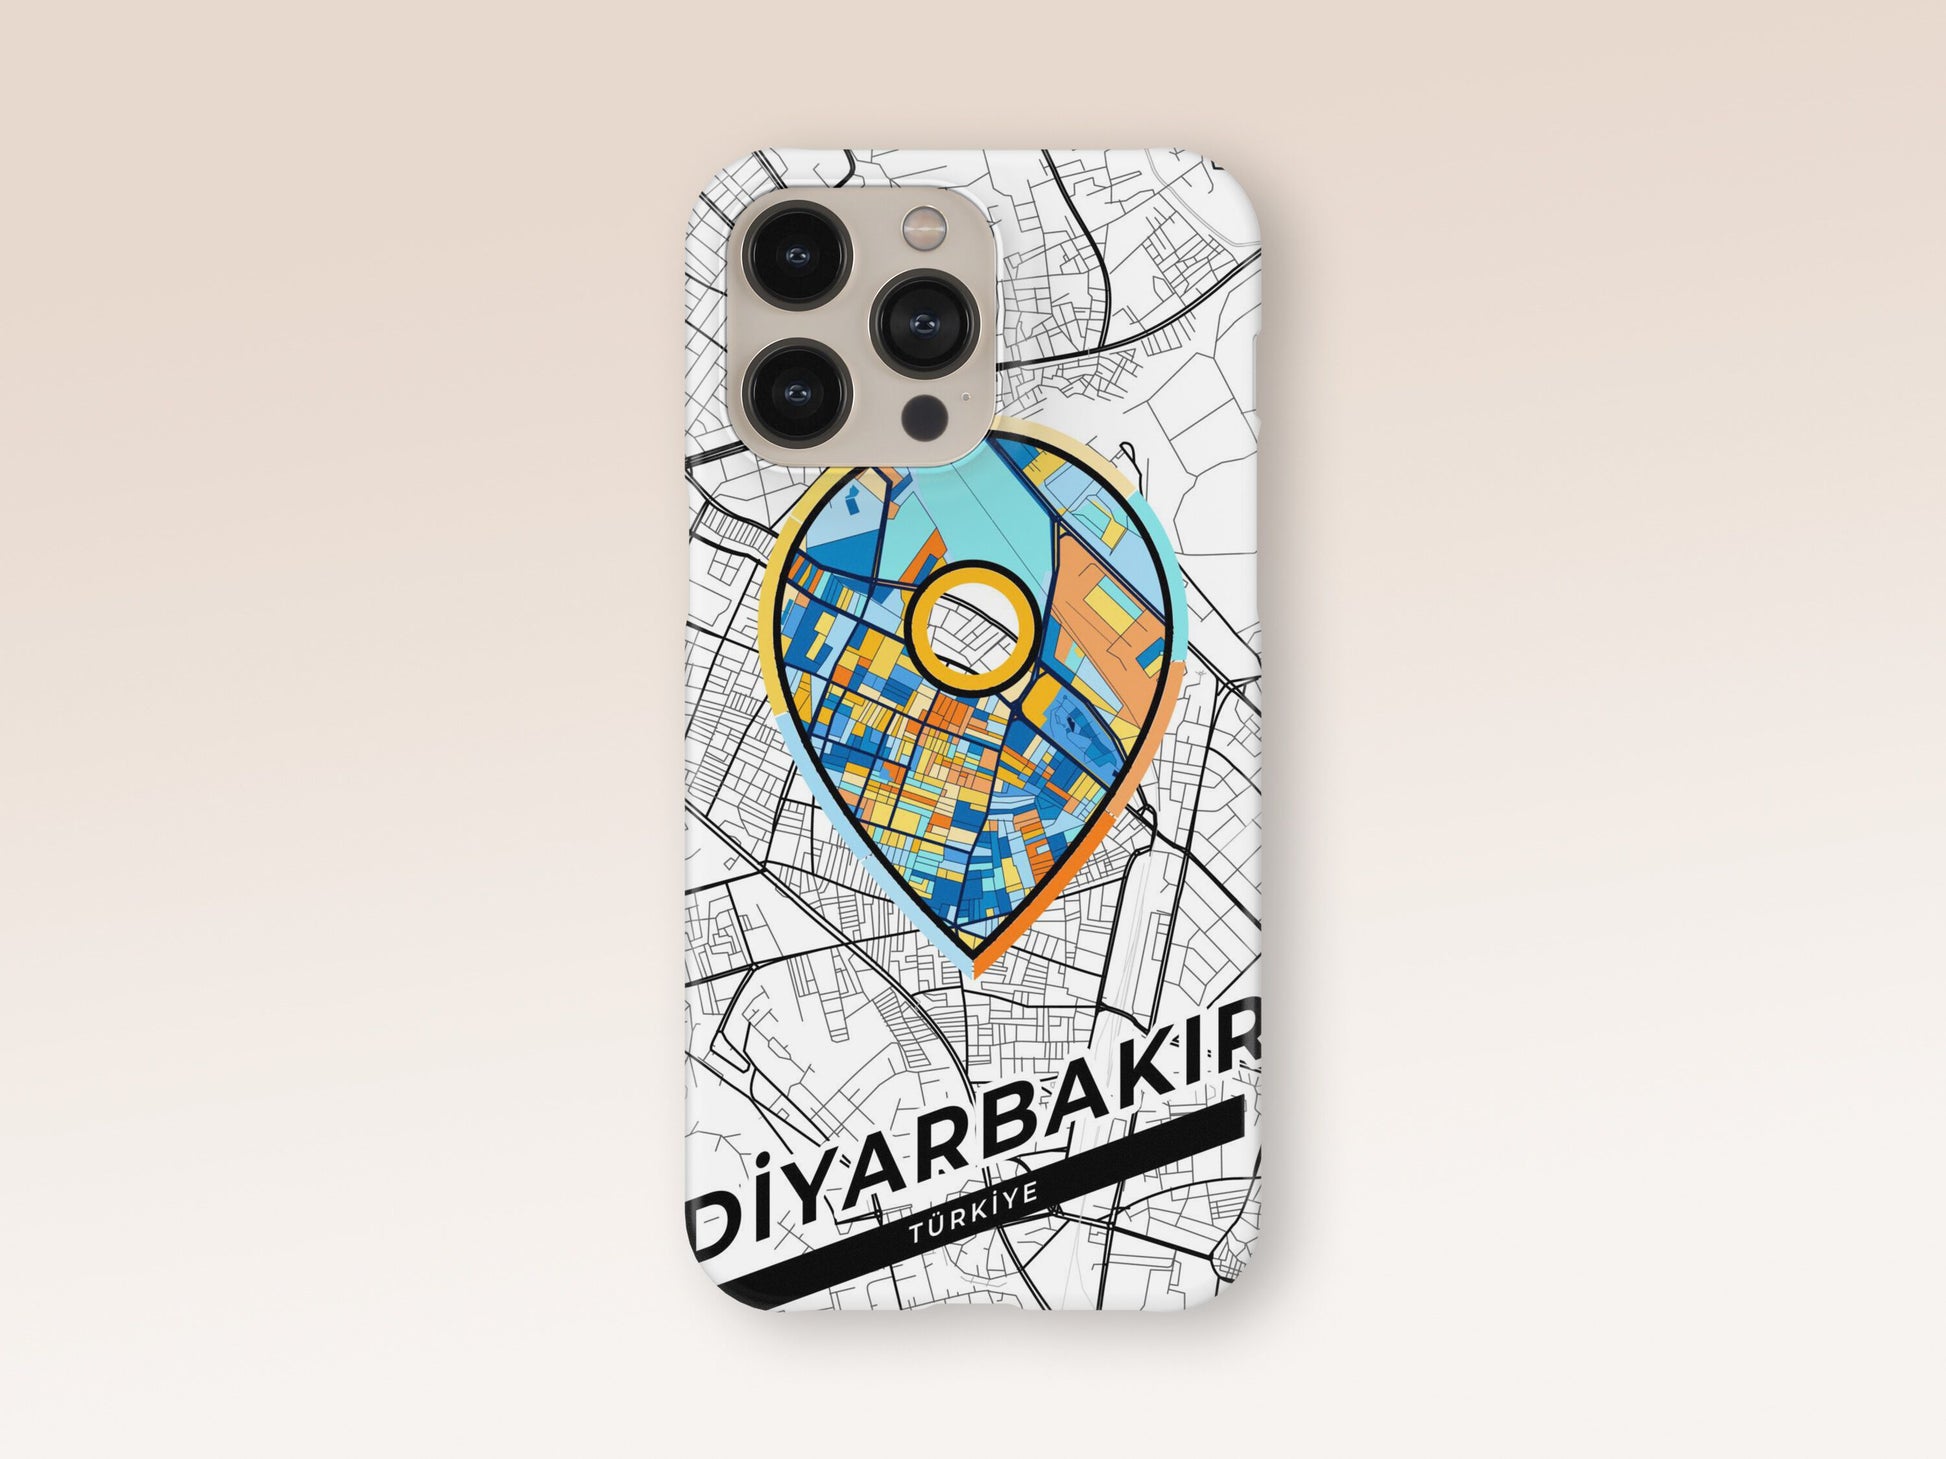 Diyarbakır Turkey slim phone case with colorful icon. Birthday, wedding or housewarming gift. Couple match cases. 1